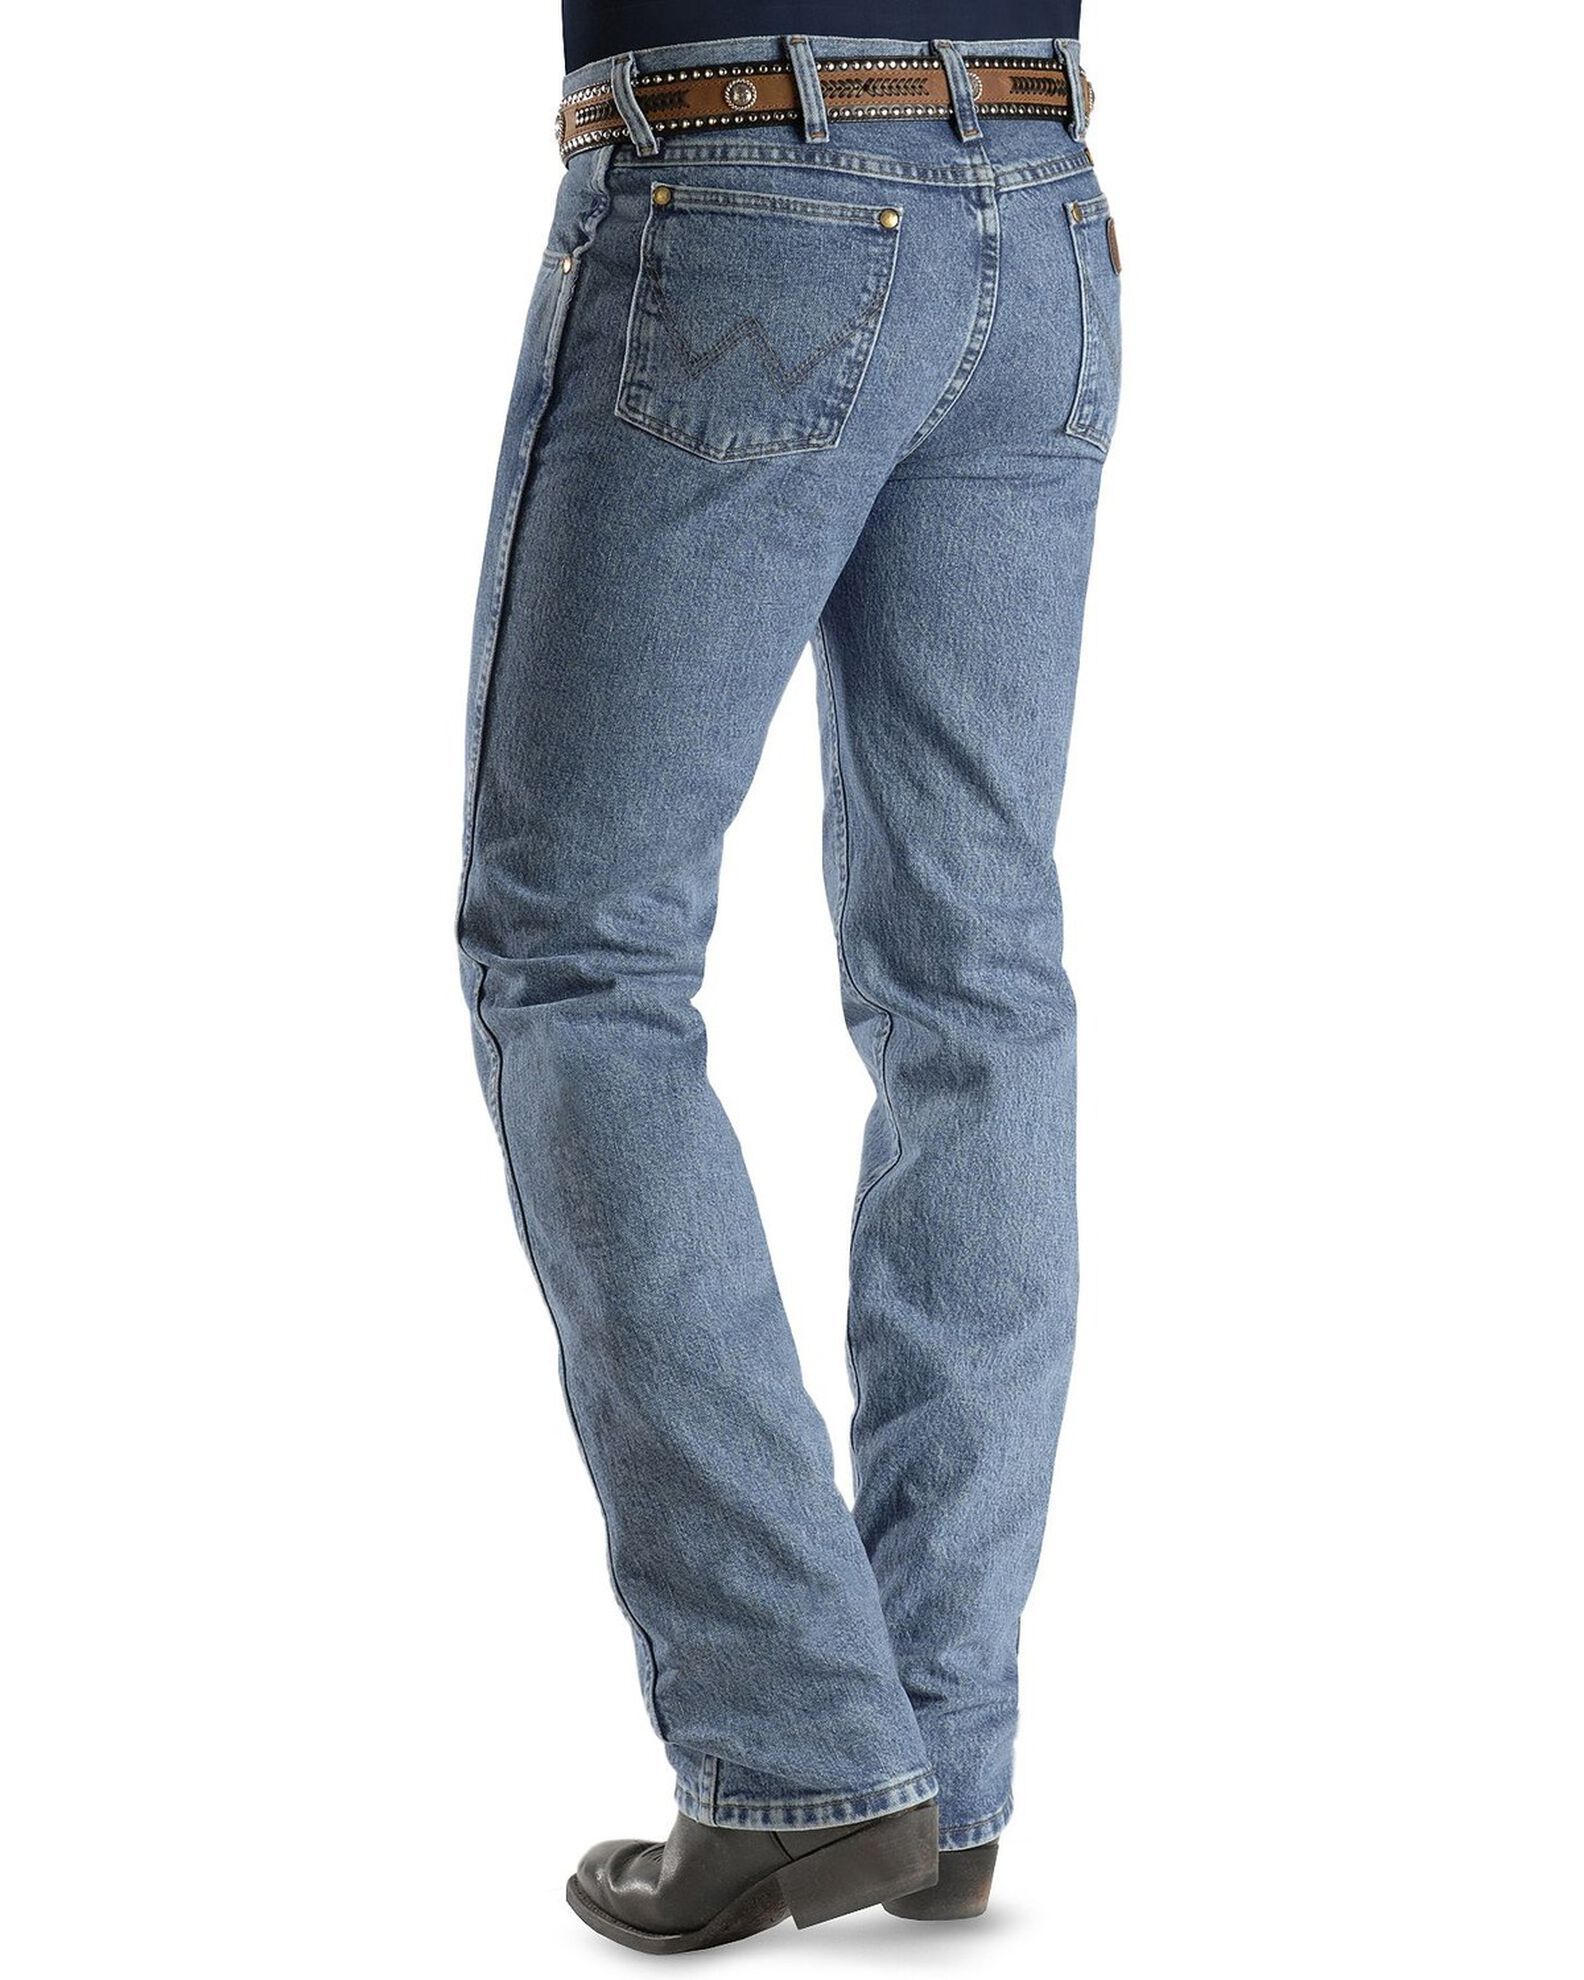 Wrangler Jeans - Cowboy Cut 36MWZ Slim Fit Jeans Stonewash | Boot Barn